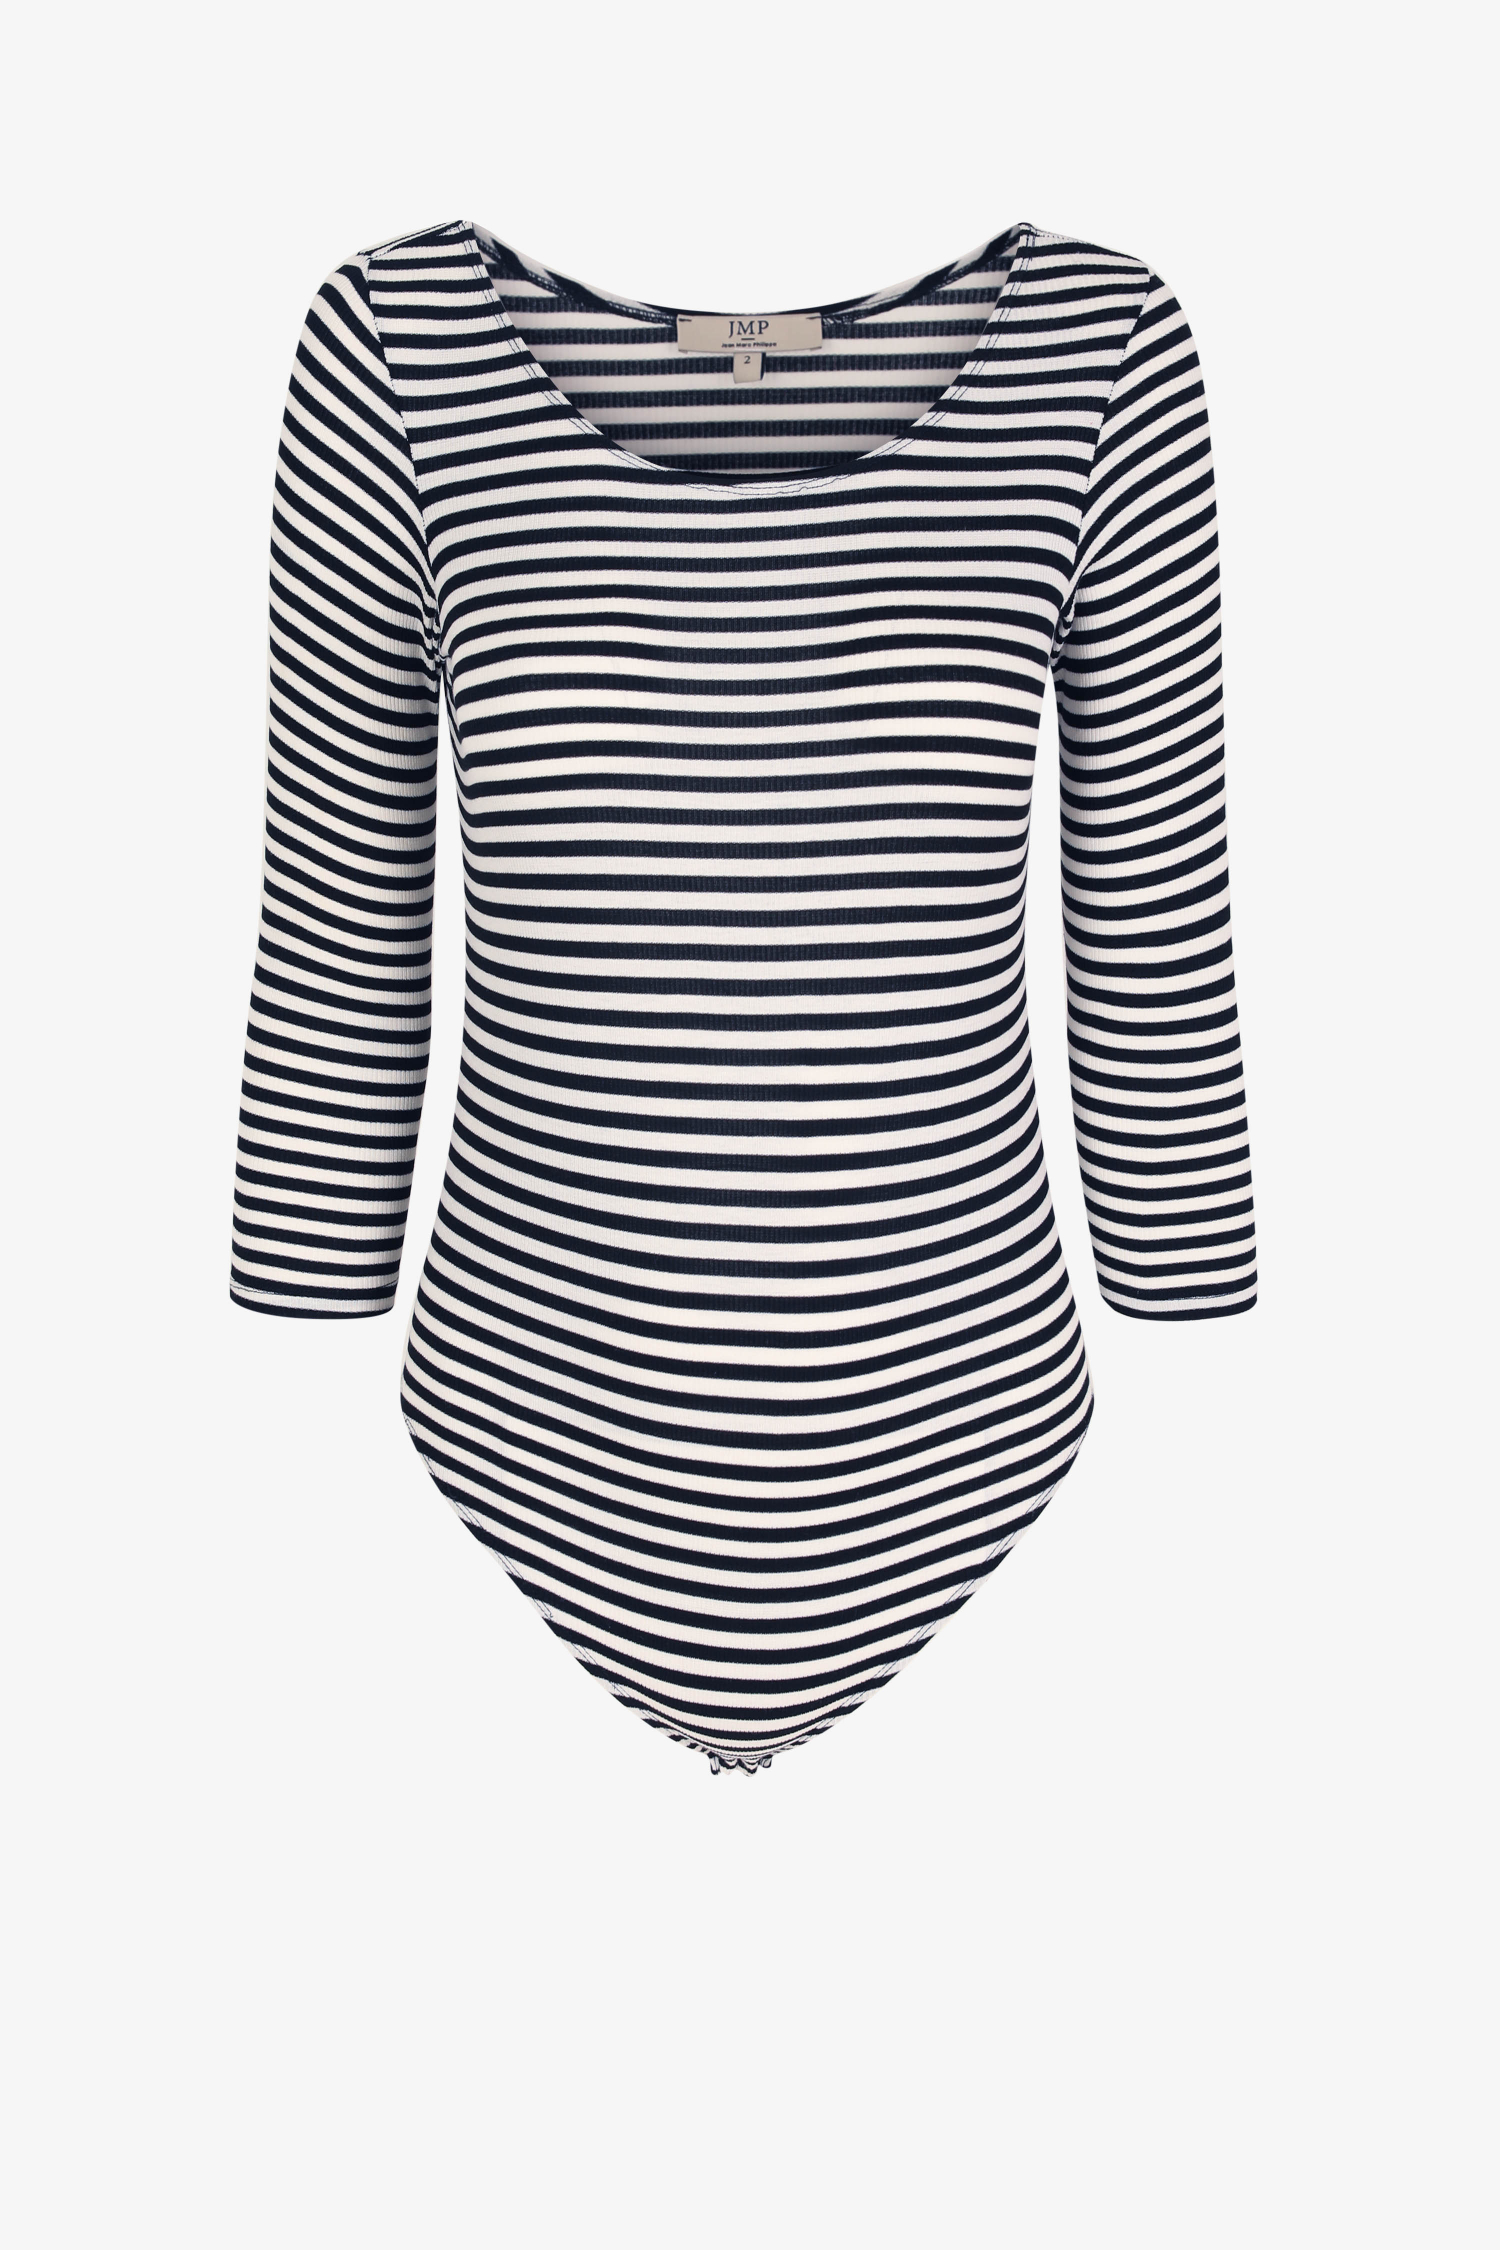 Striped rib knit bodysuit (shipping May 20/25)